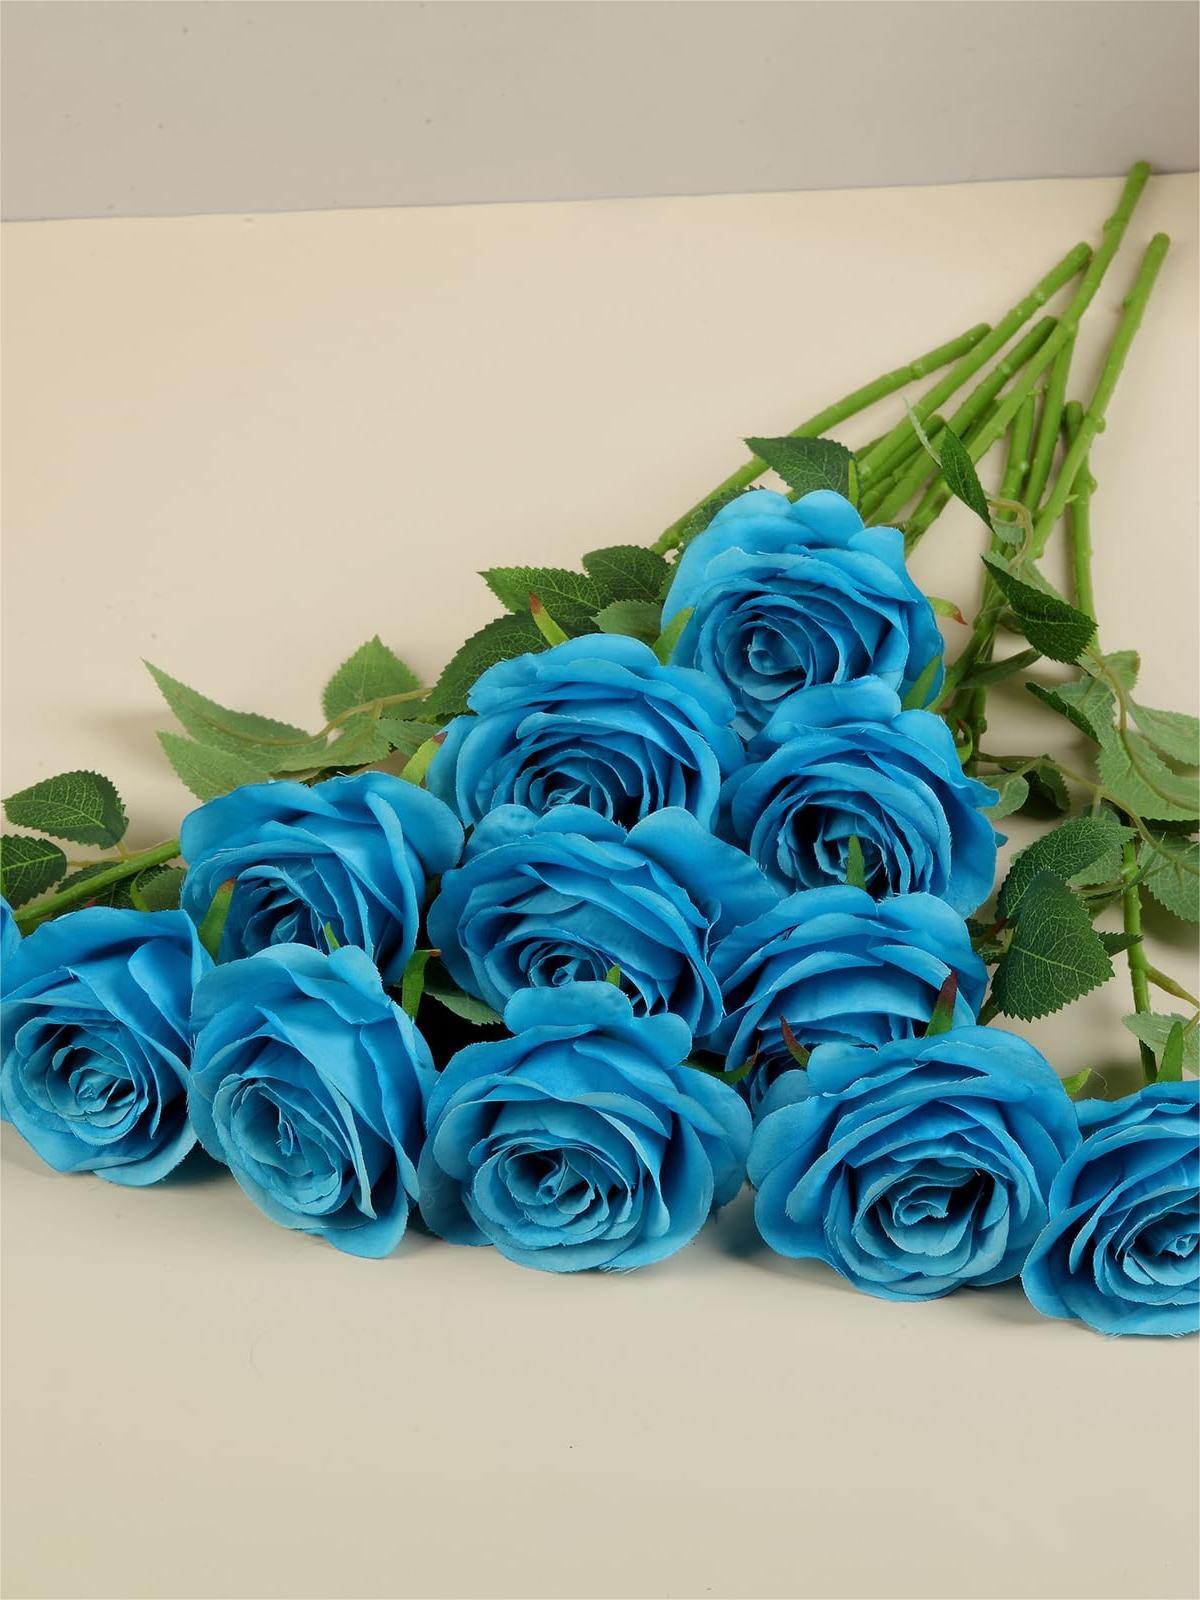 Indigo Artificial Rose Flowers With Long Stems Wedding Bouquet Centerpieces Decorations HH8043